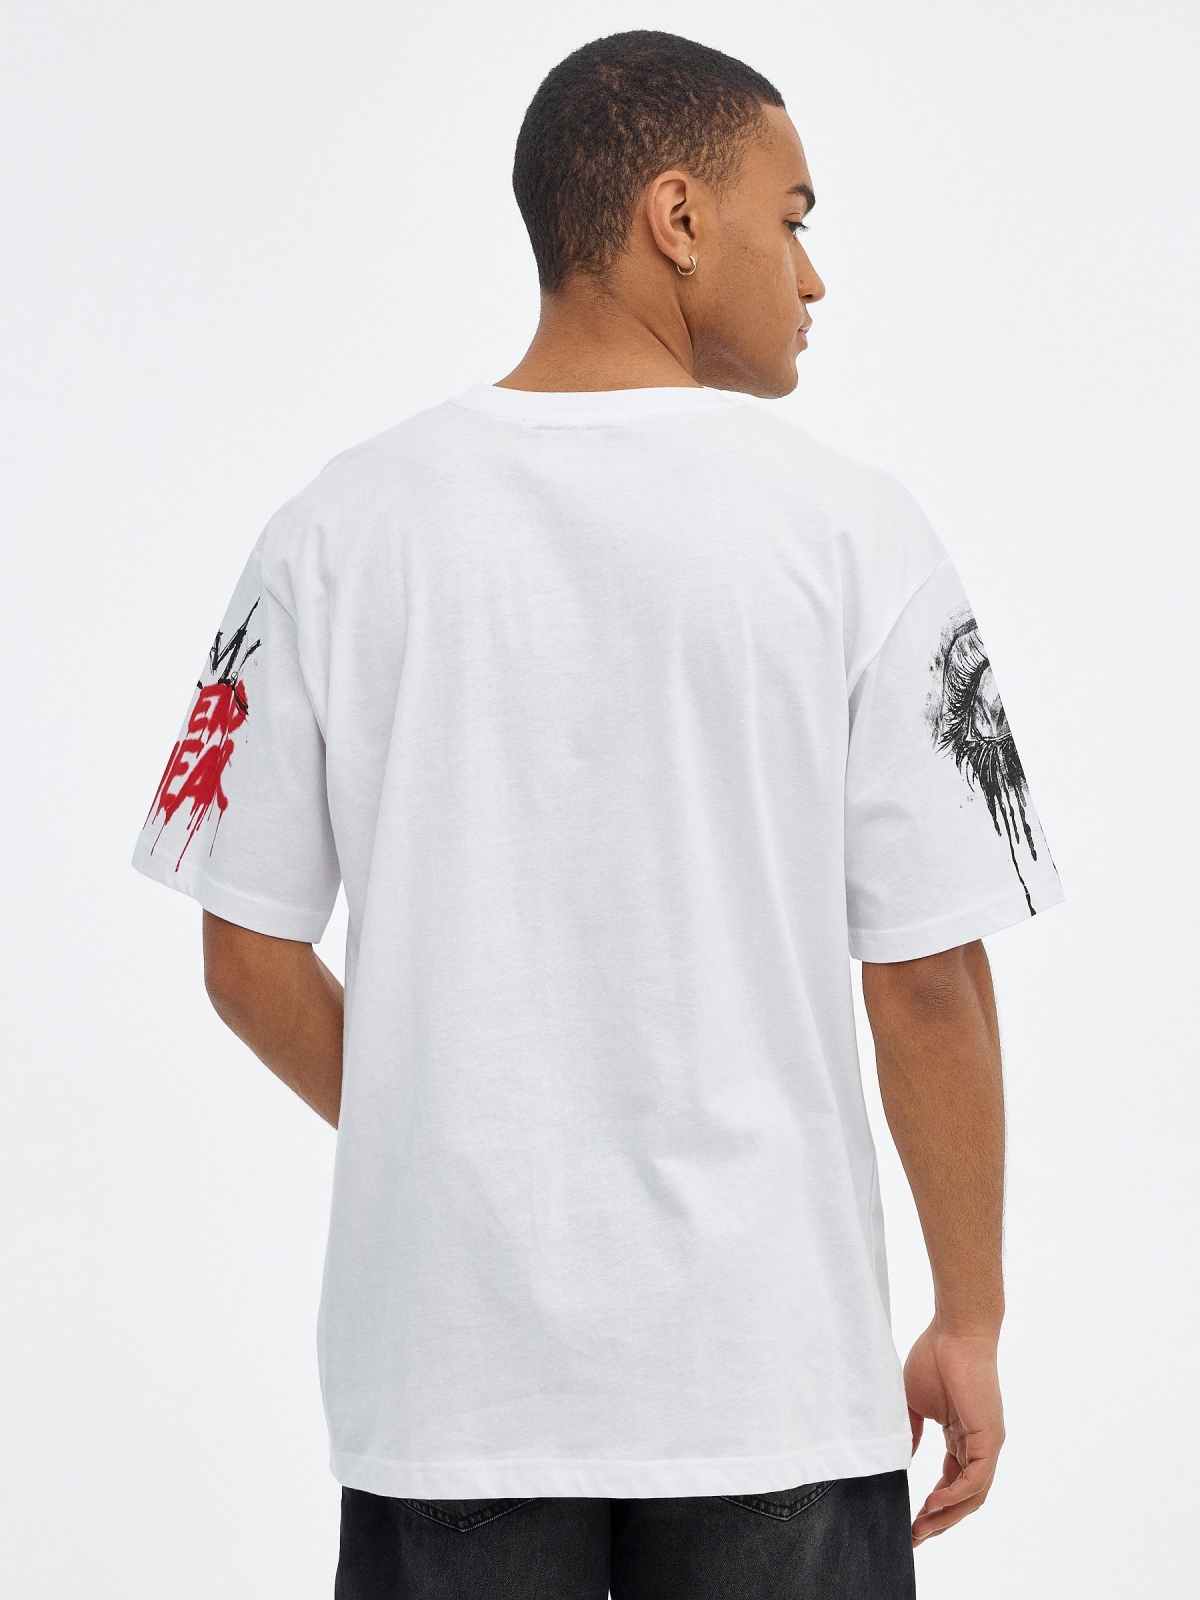 Camiseta oversized con estampado graffiti blanco vista media trasera